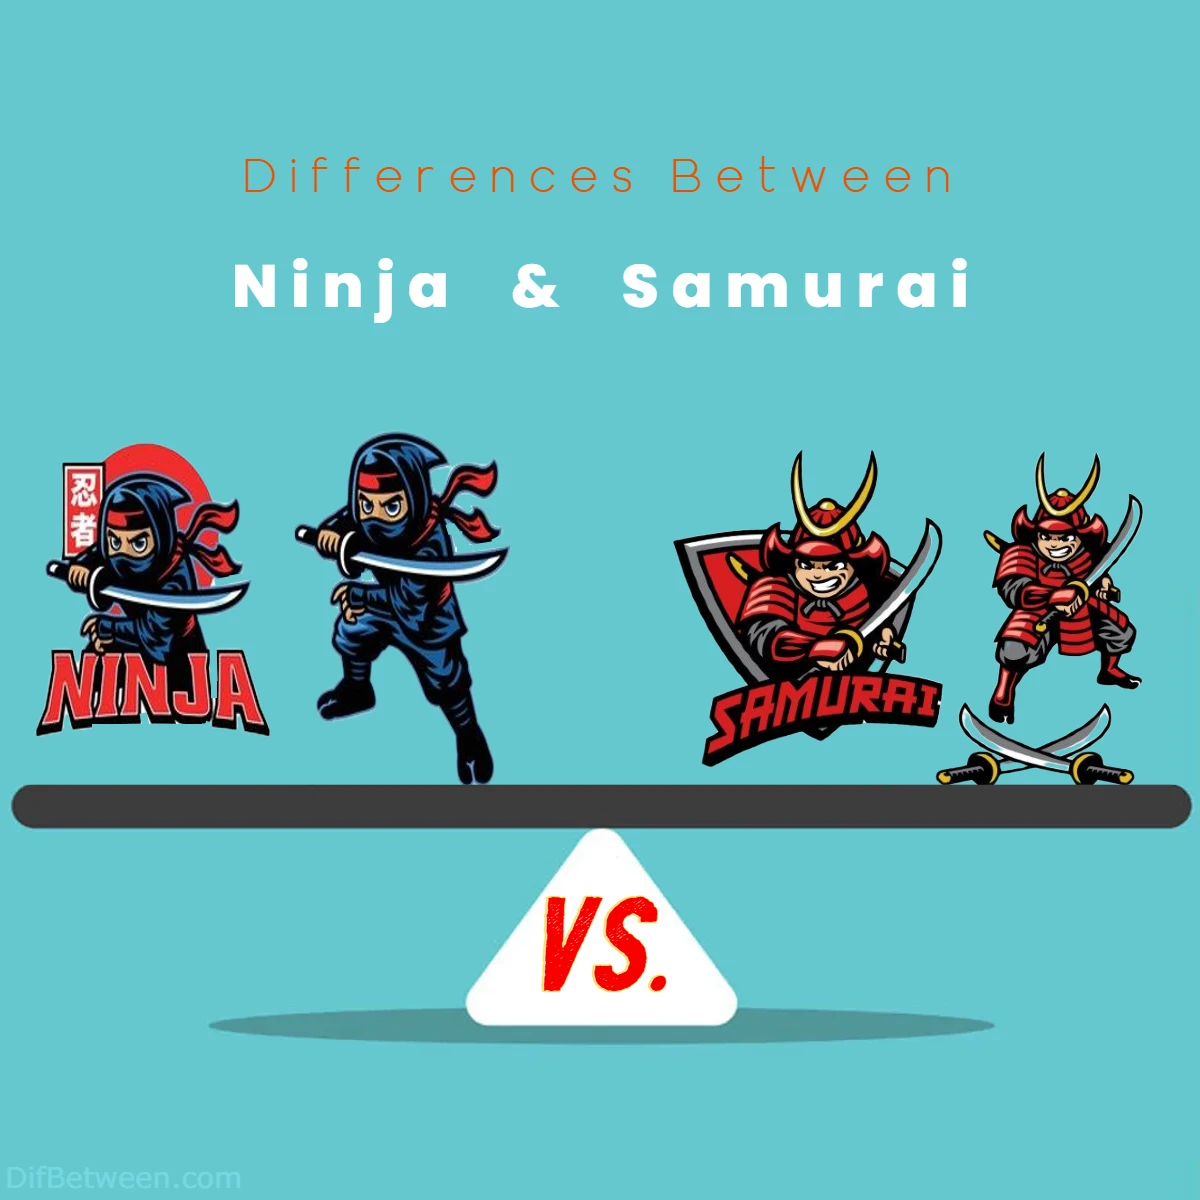 Differences Between Ninja vs Samurai